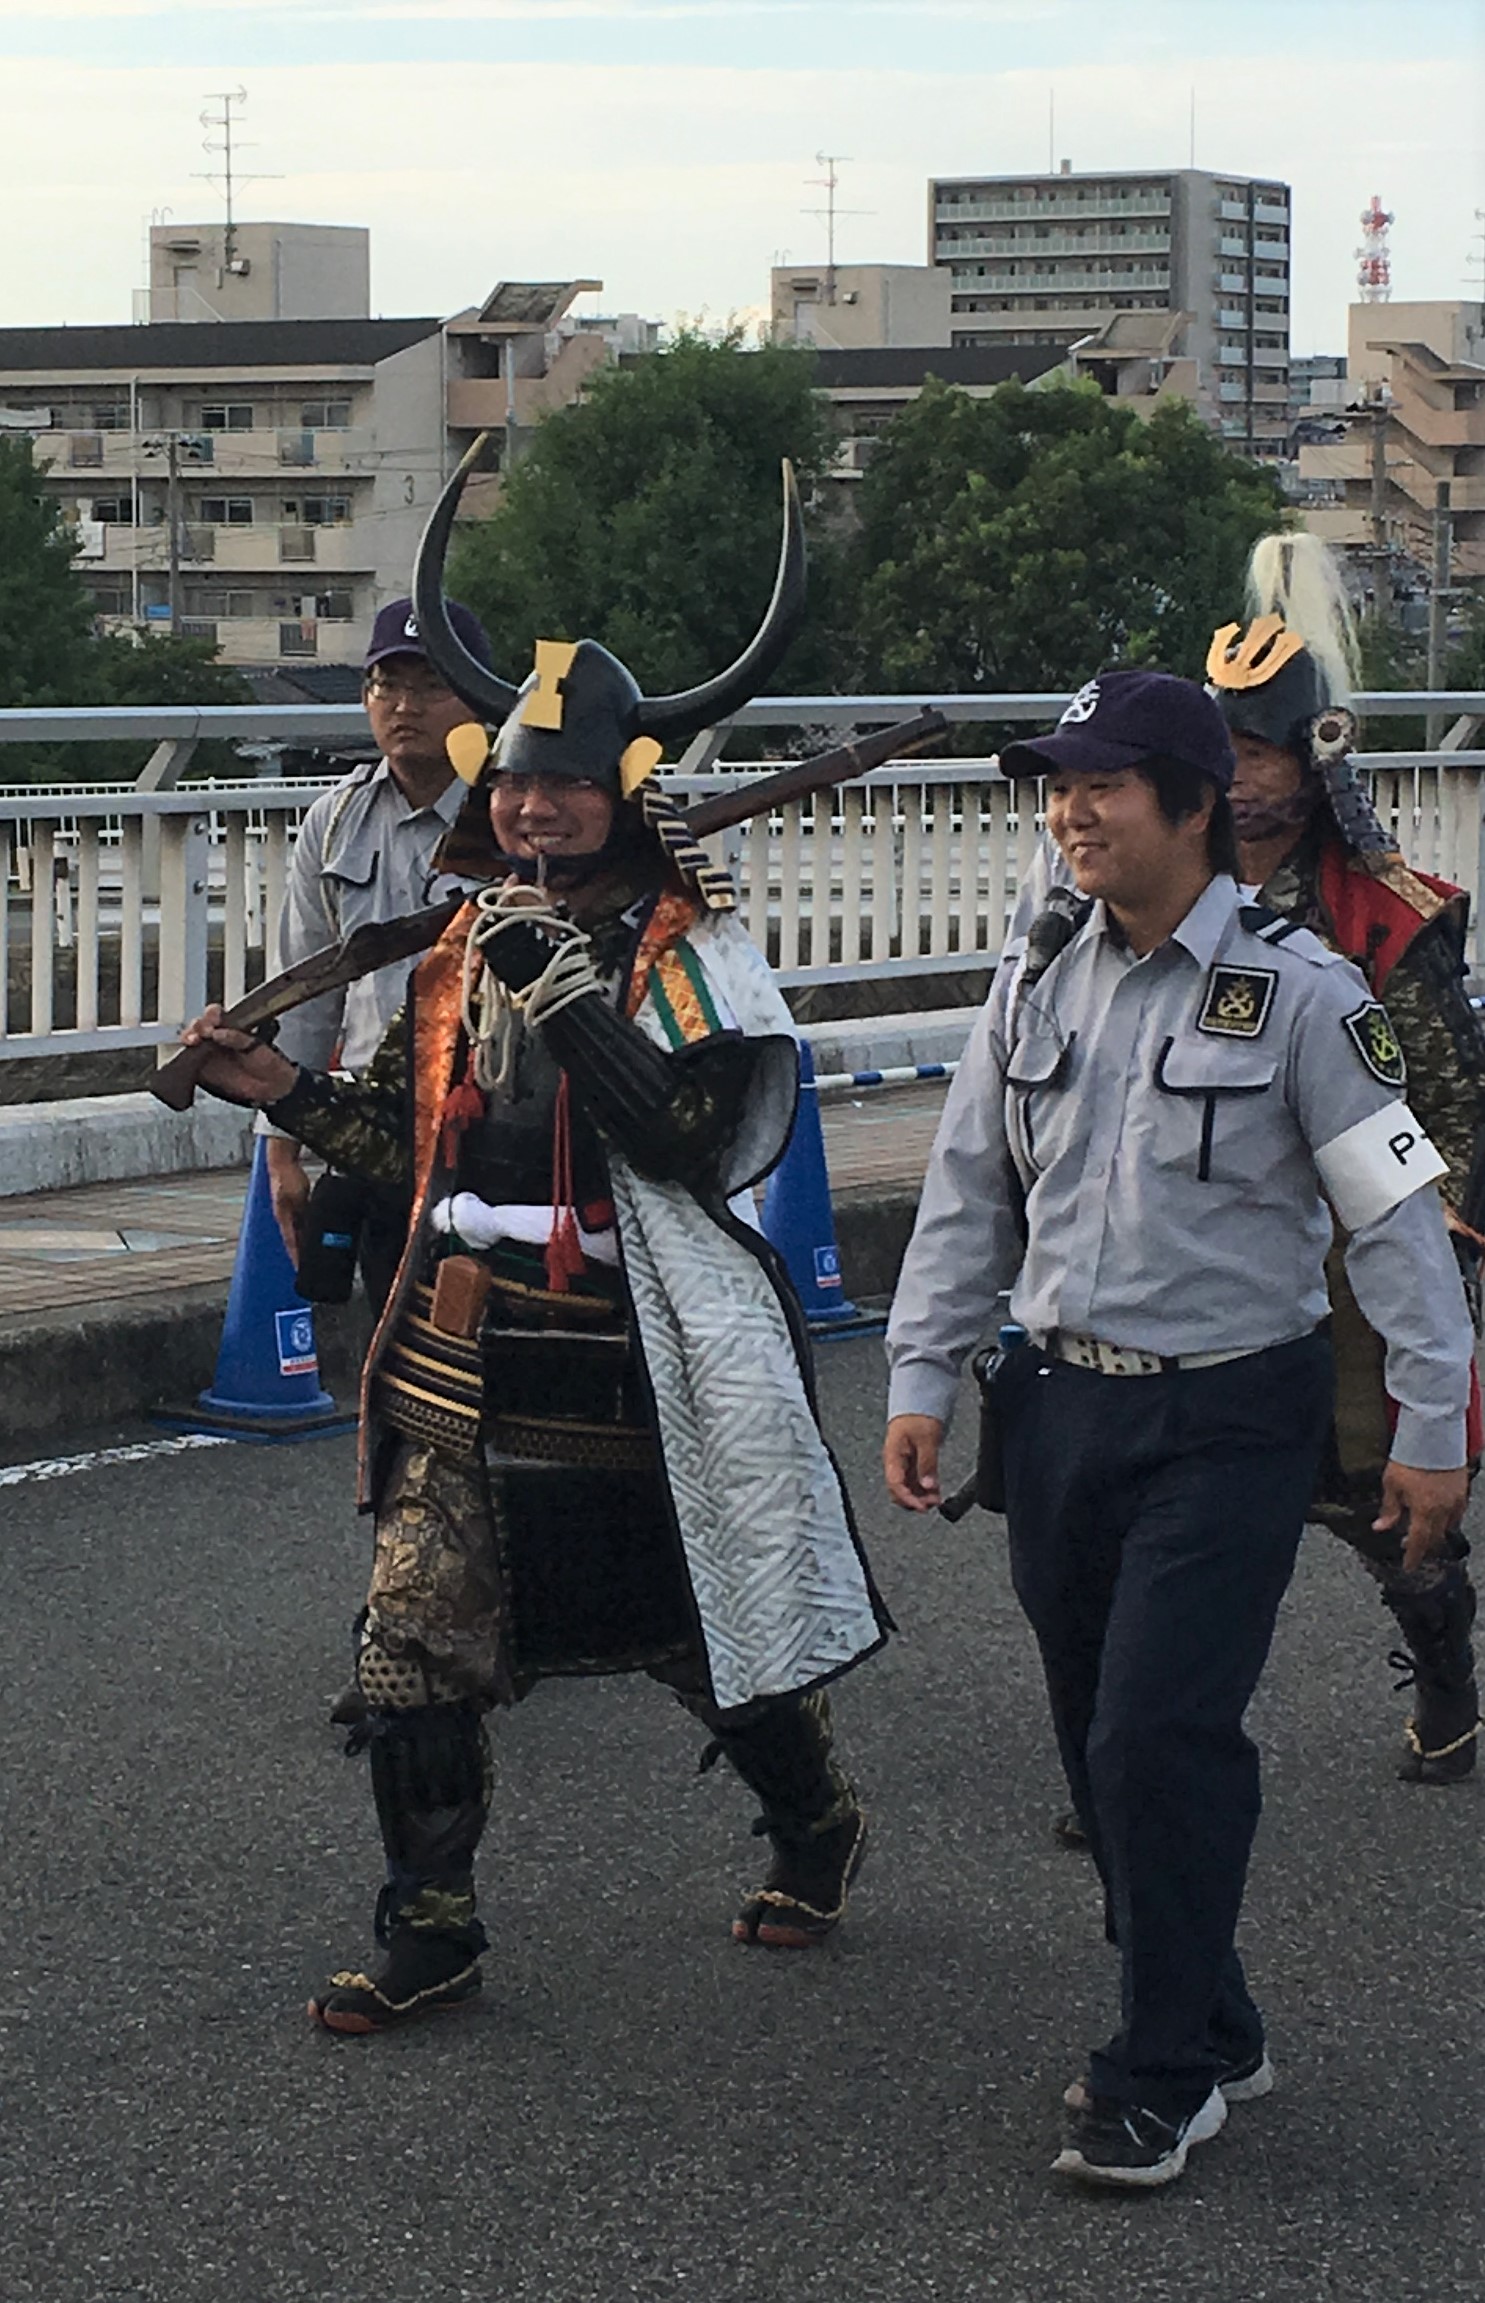 Man in traditional Japanese clothes carrying musket at Sumiyoshi Matsuri